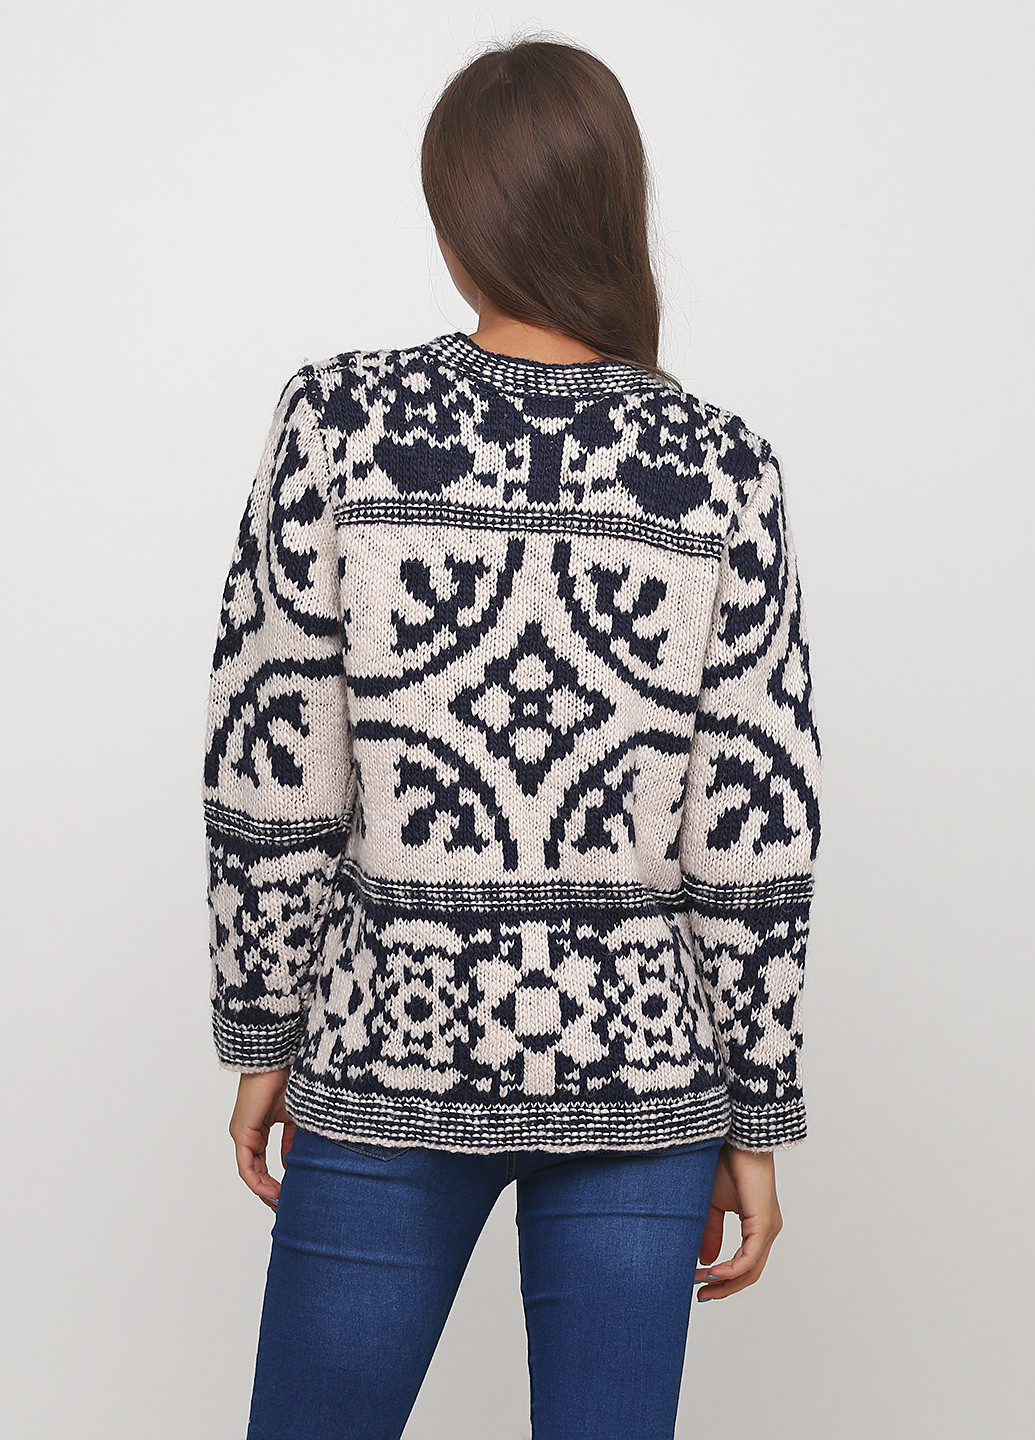 Комбинированный зимний джемпер пуловер Paul & Joe